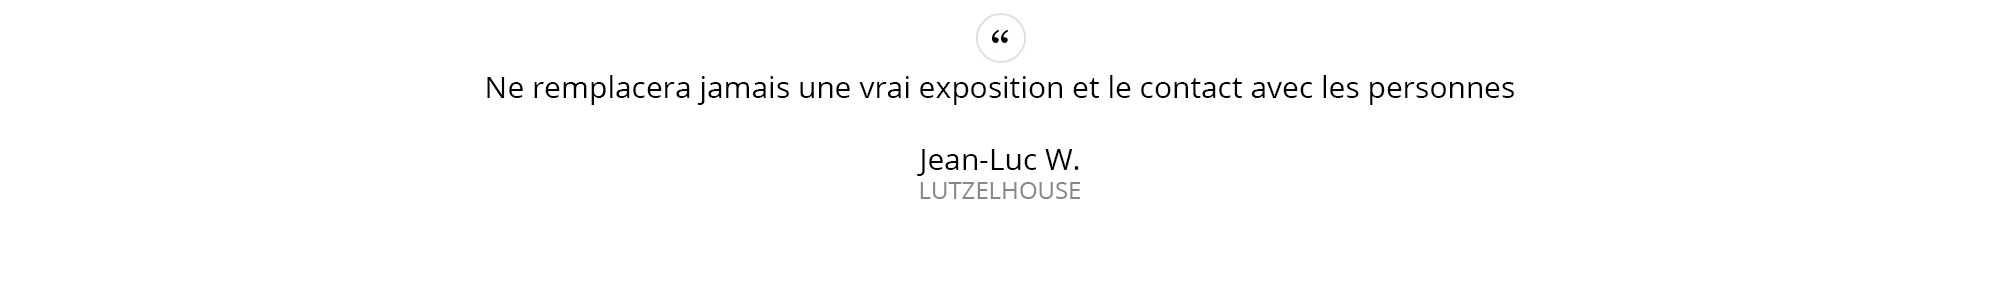 Jean-Luc-W.---LUTZELHOUSE